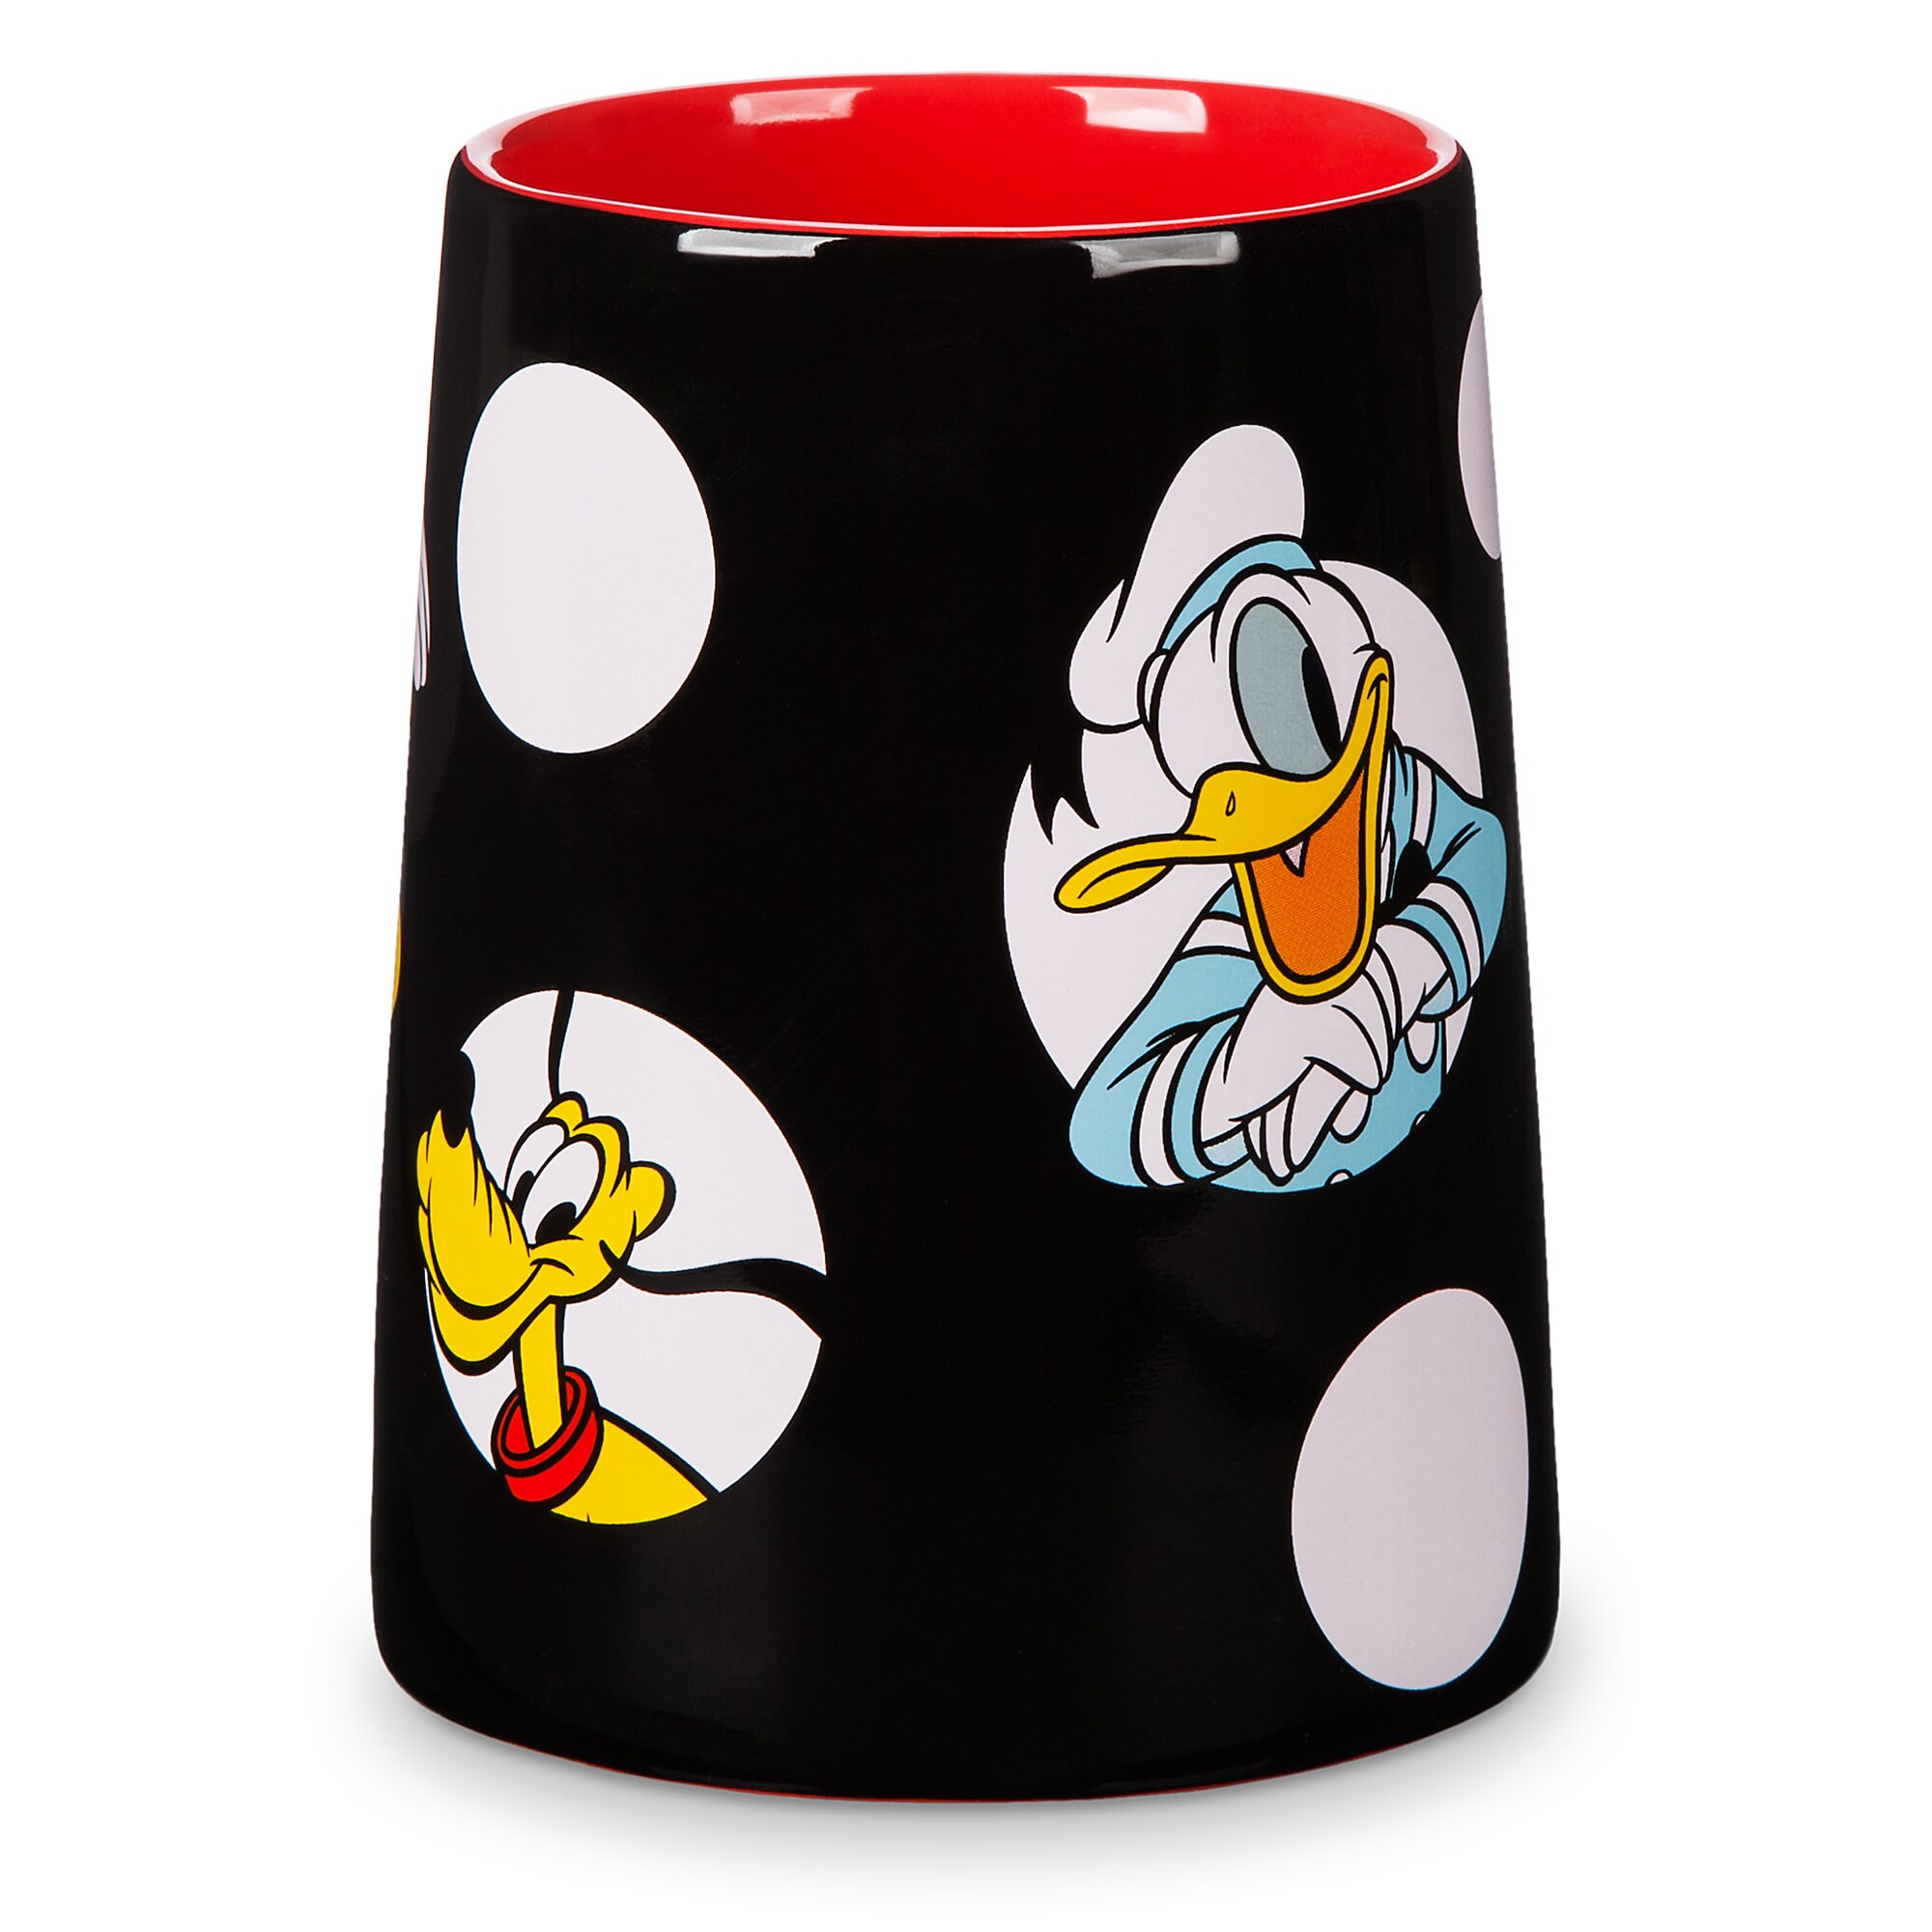 Mickey Mouse and Friends Mug - Disney Eats